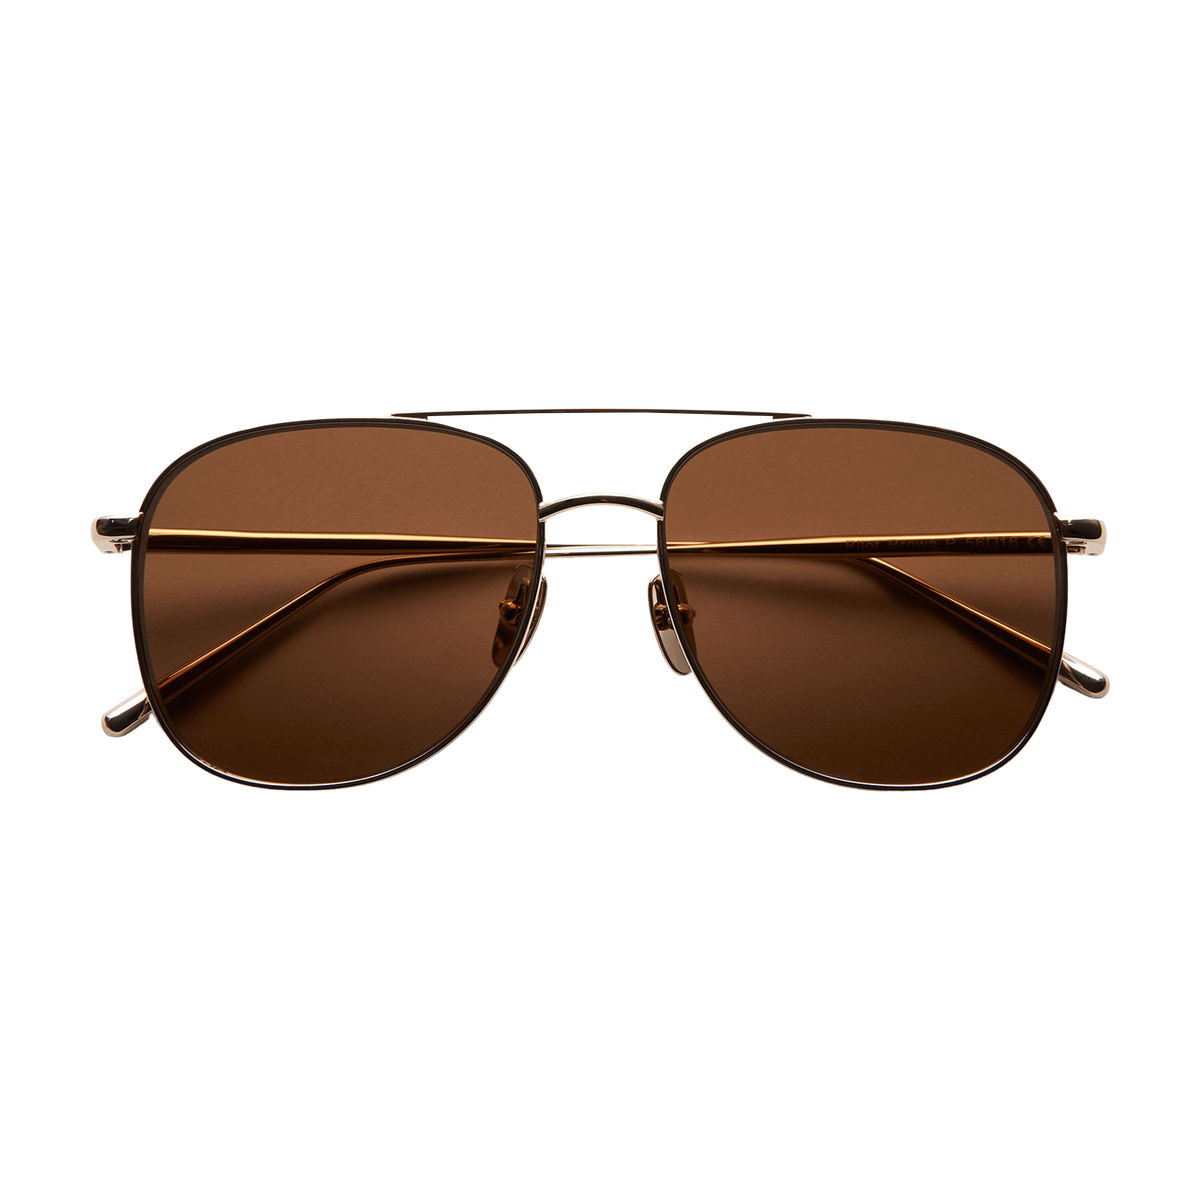 Chimi Eyewear Steel Pilot Brown Lenses Sunglasses 55mm Feature